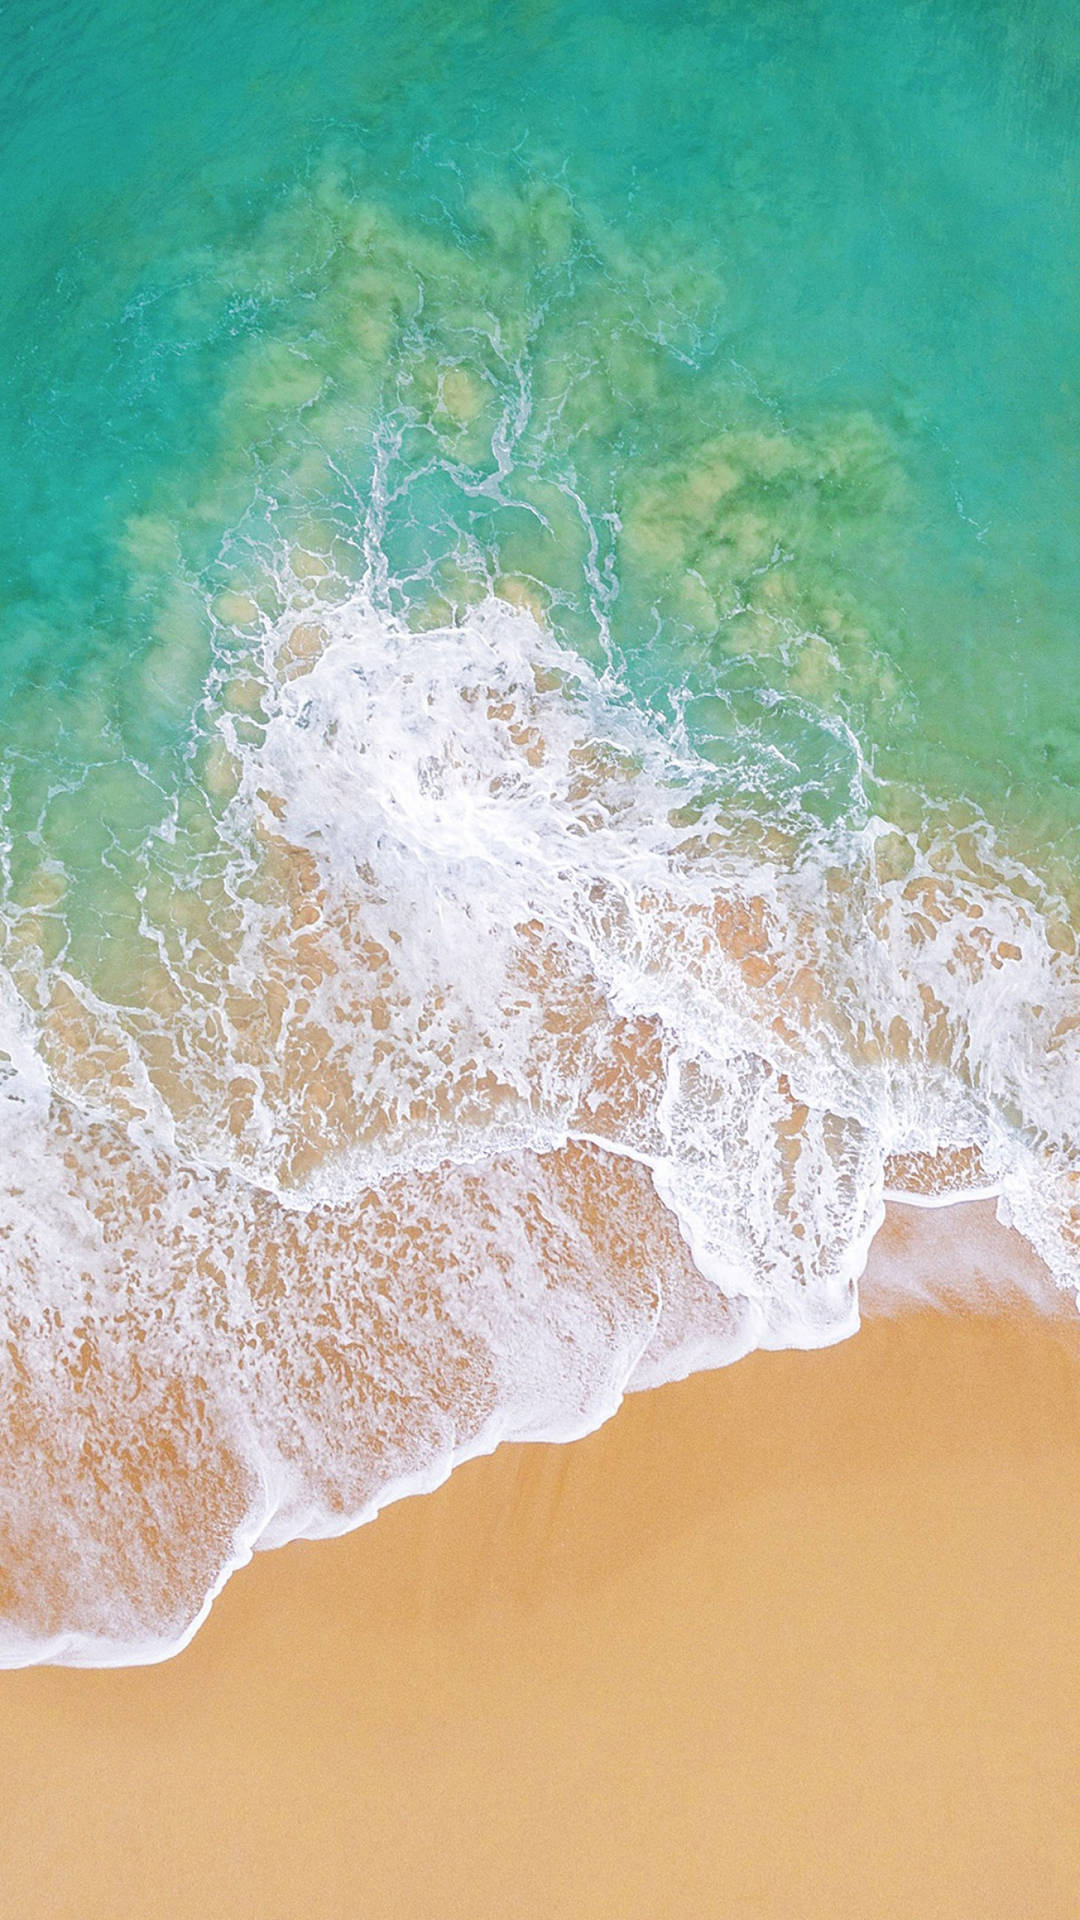 Iphone X Beach Green Sea Background